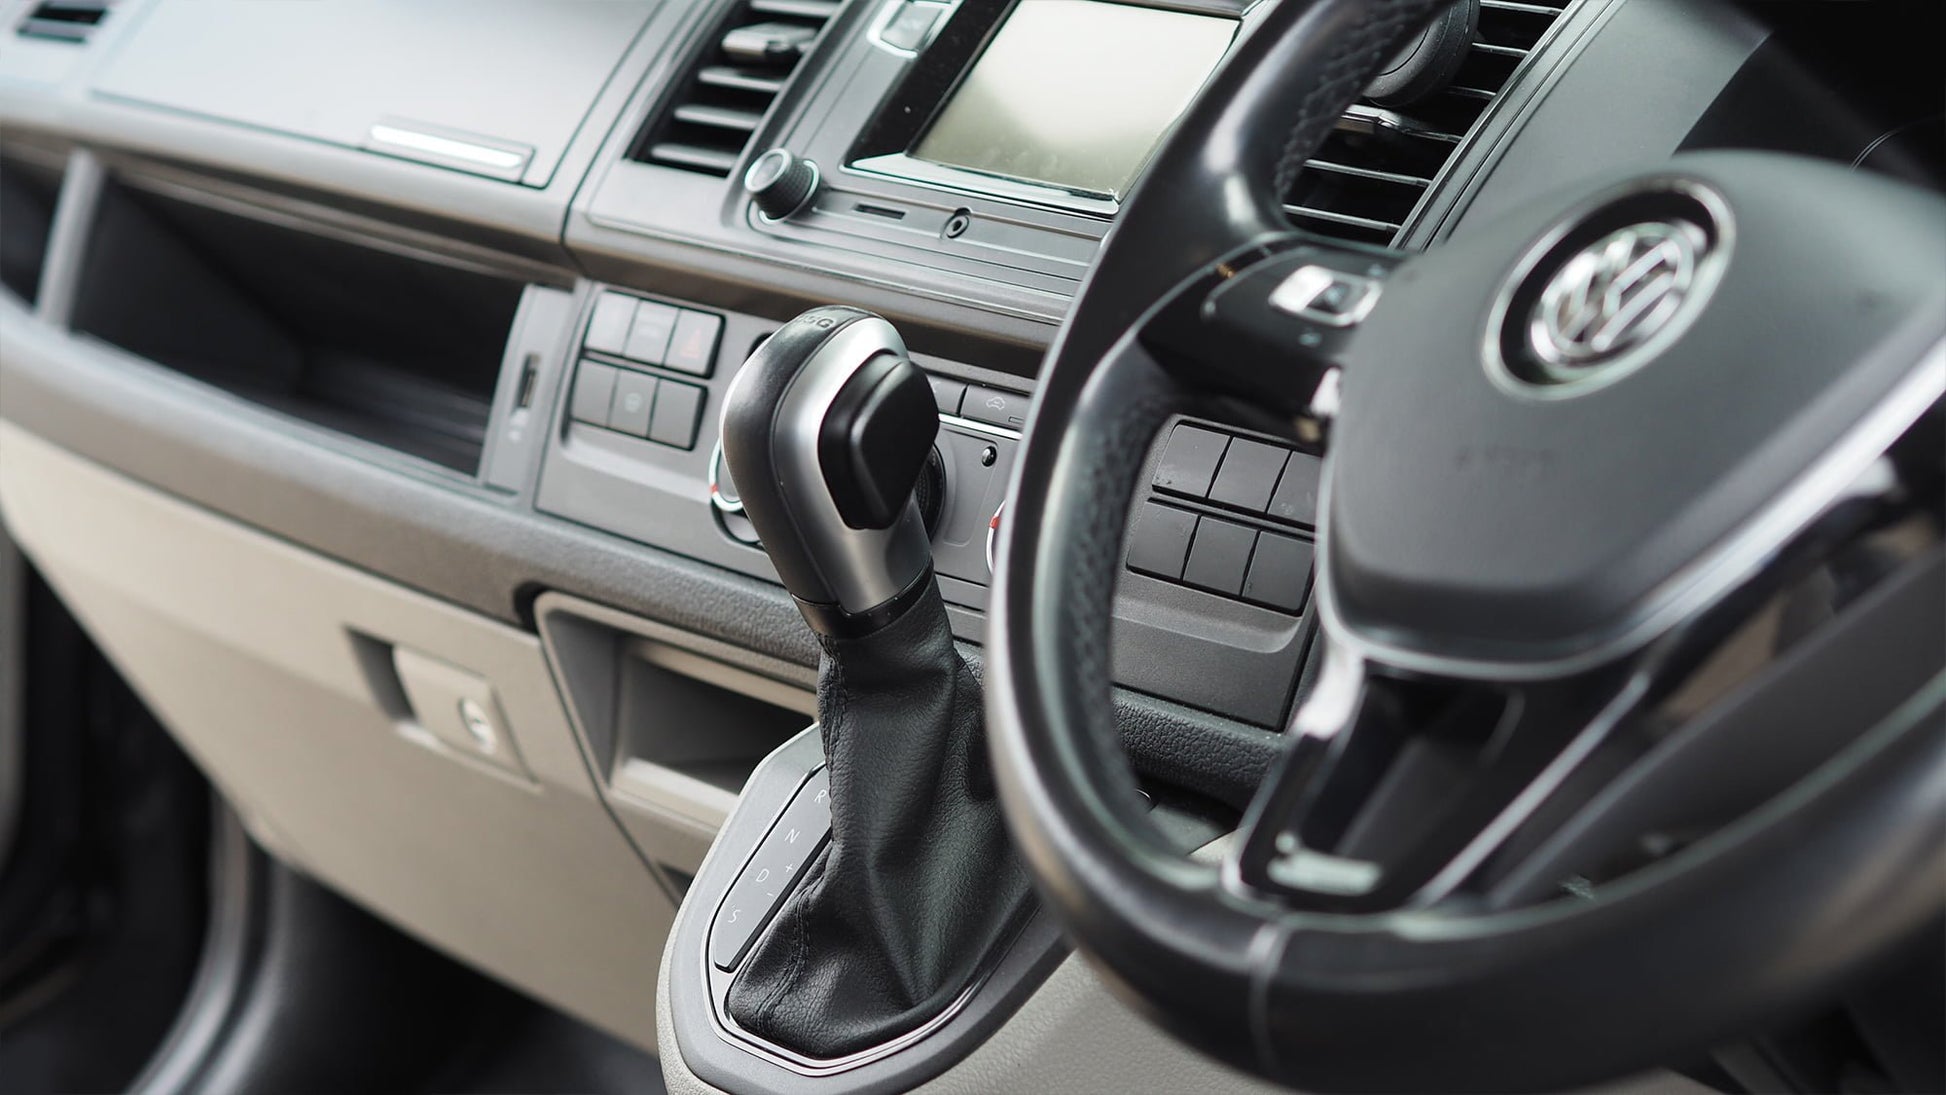 VW T5.1 Auto/DSG Gear Knob Side Caps - Matte Chrome Interior Styling P – Van -X